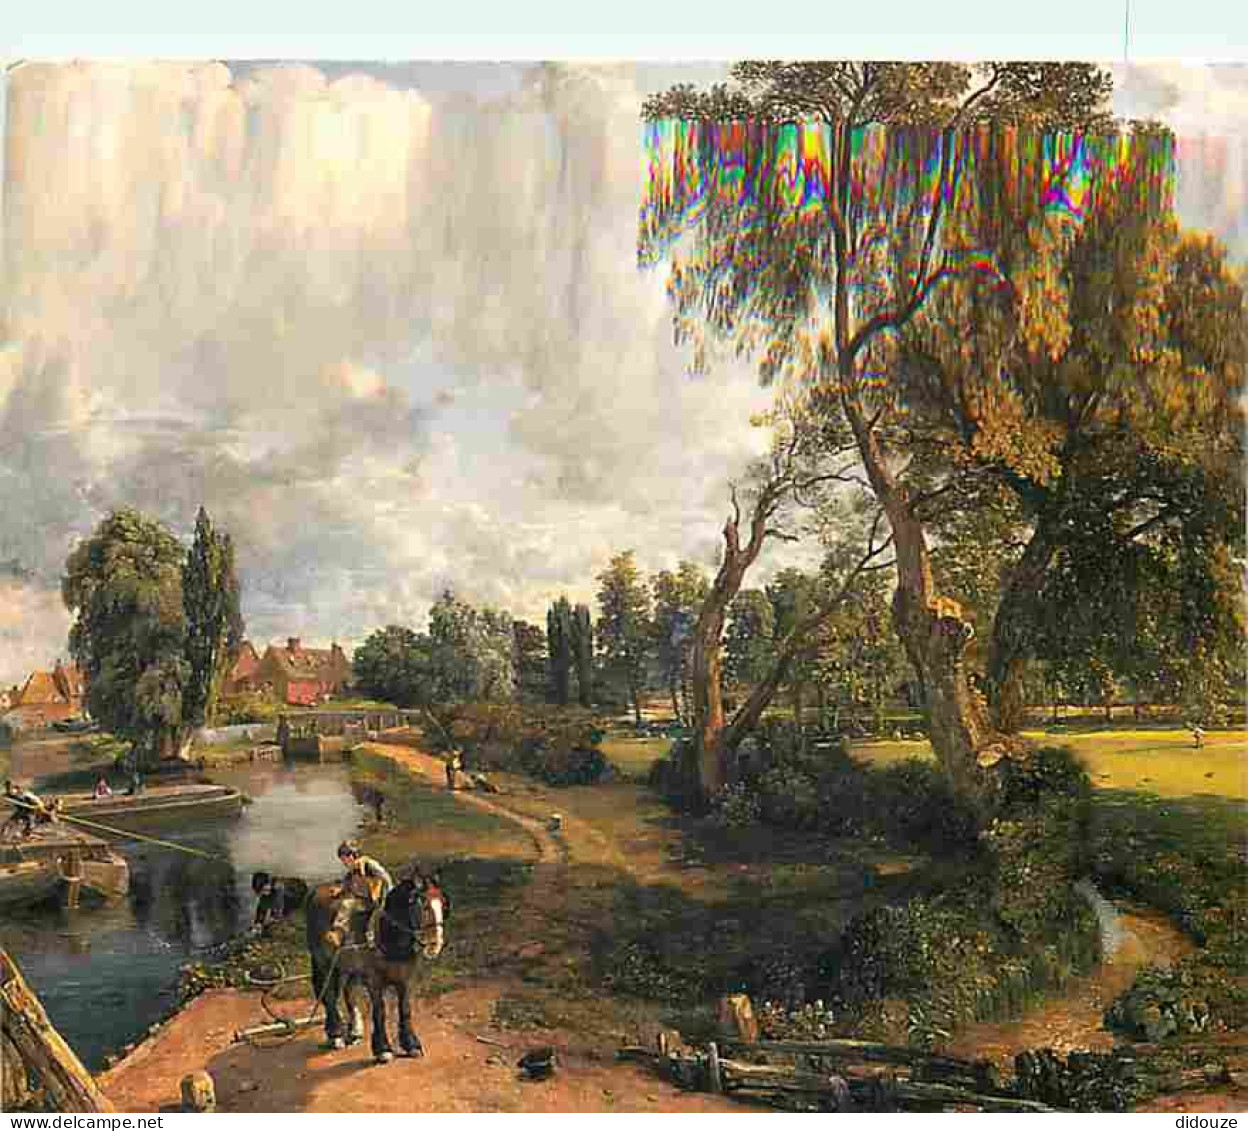 Art - Peinture - John Constable - Flatford Mill - CPM - Voir Scans Recto-Verso - Paintings